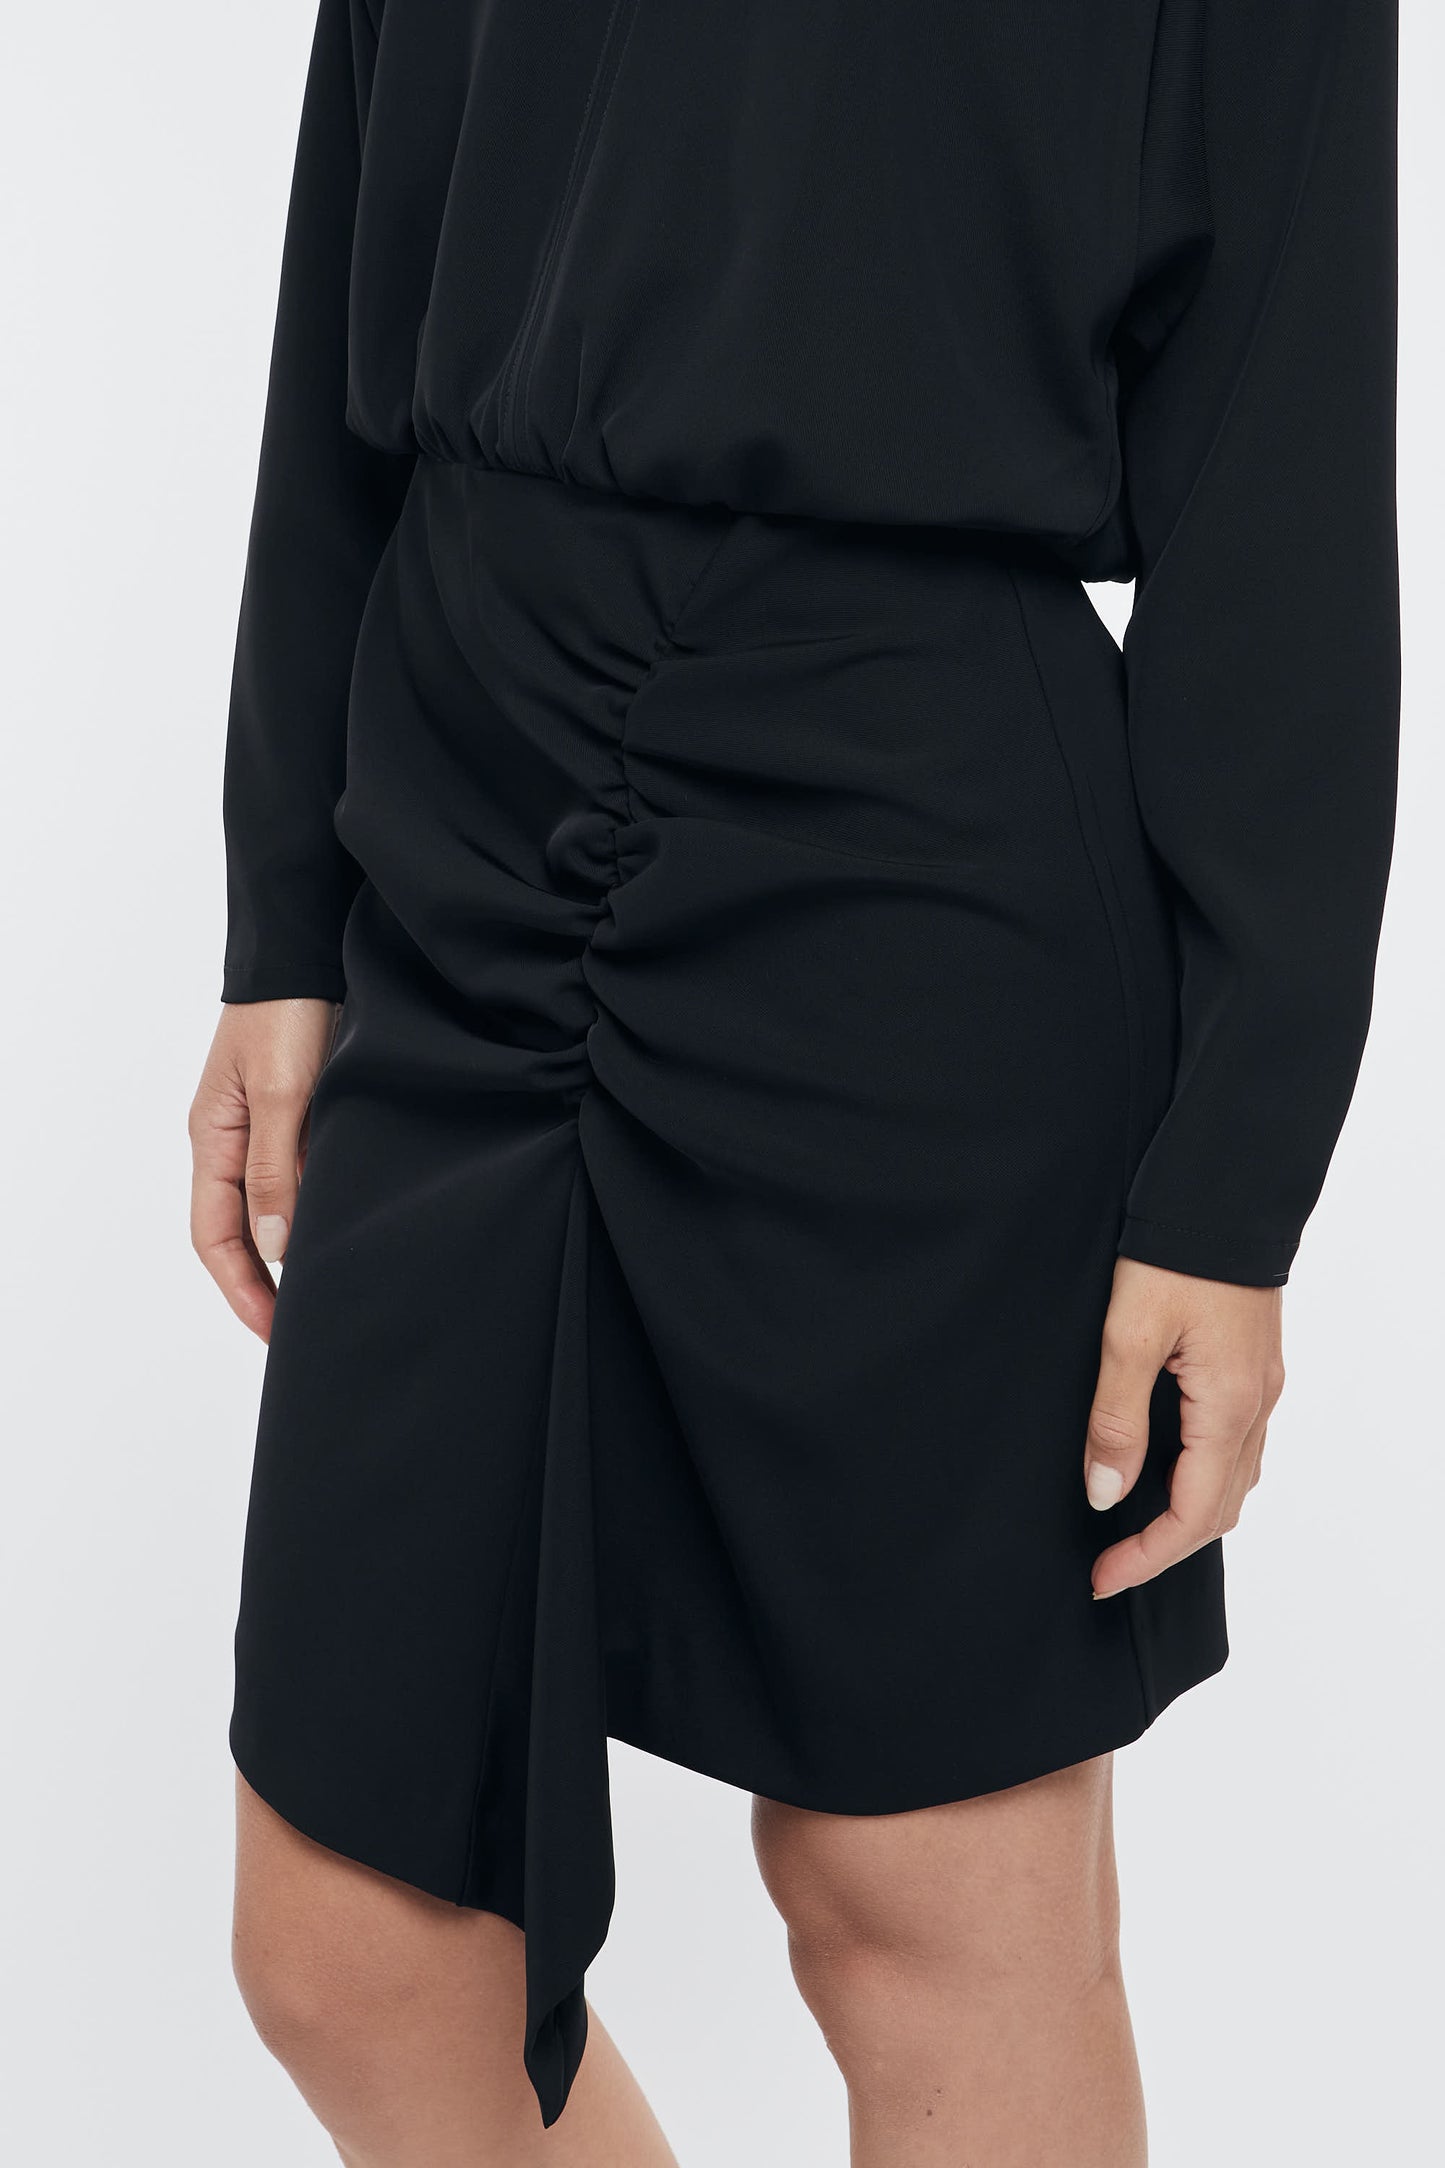  8 Pm Ashcroft Black Dress For Women Nero Donna - 6